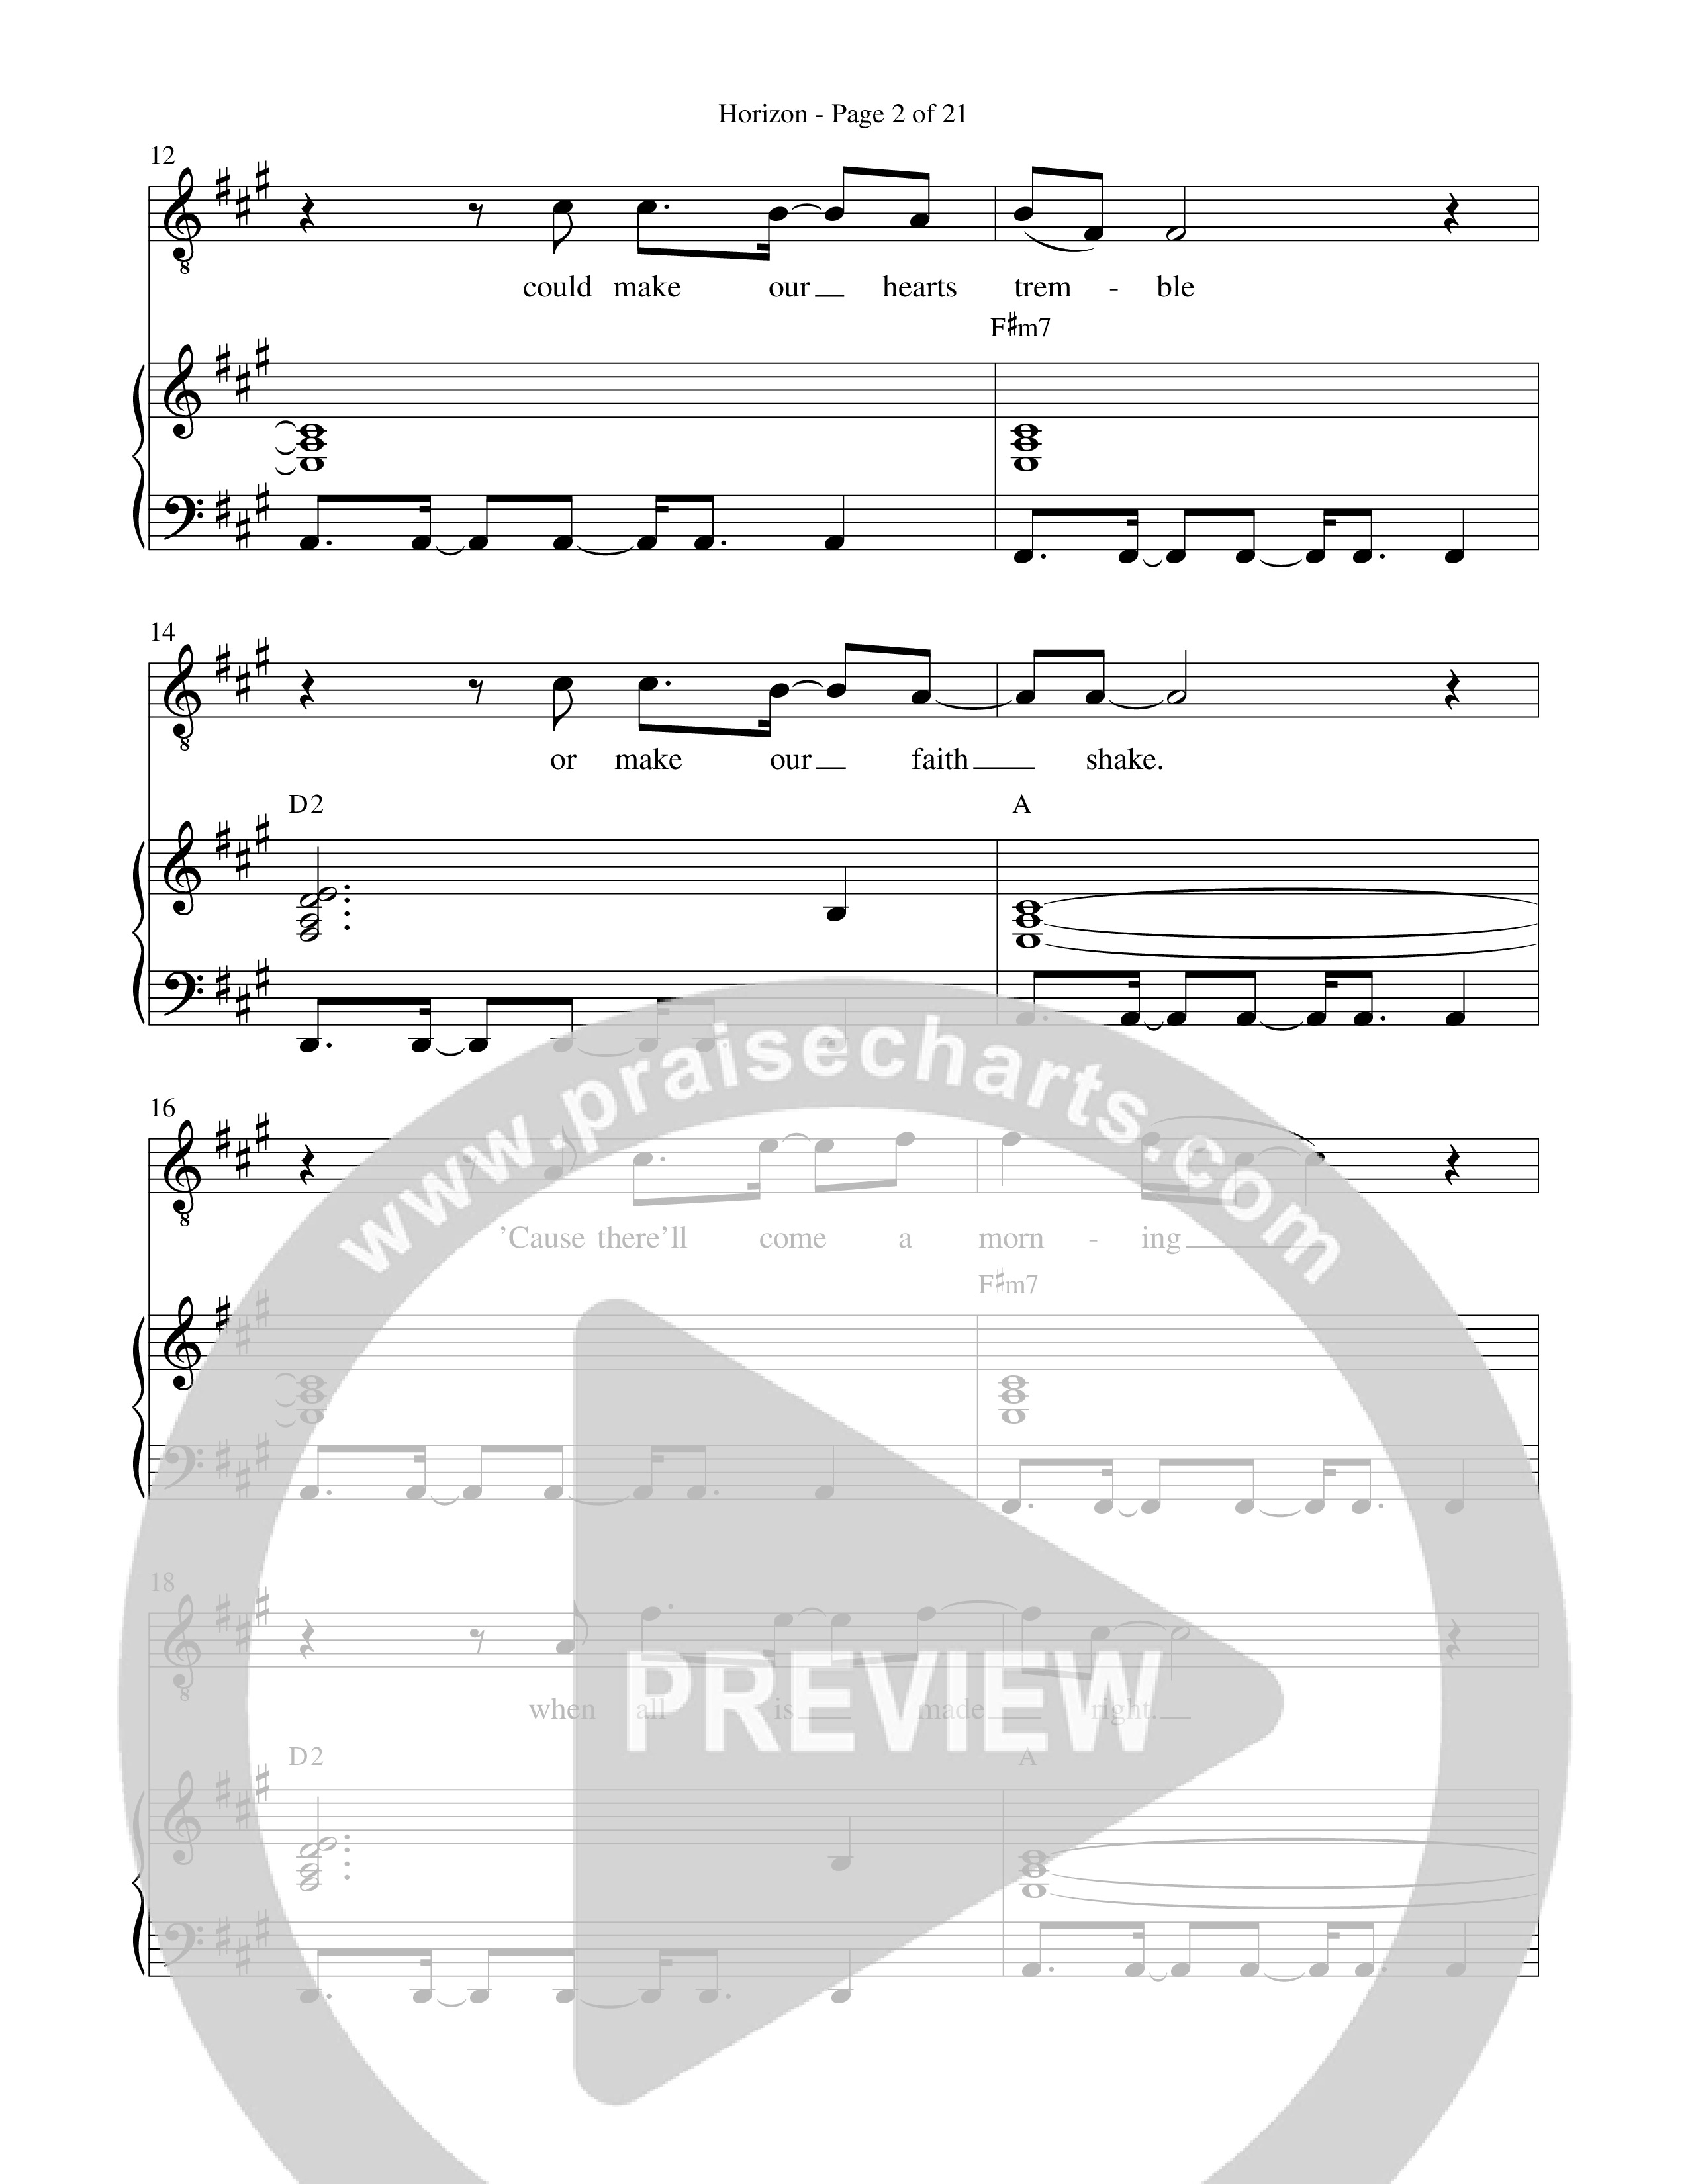 Horizon (Choral Anthem SATB) Choral Vocal Parts (Prestonwood Worship / Prestonwood Choir / Michael Neale / Orch. Jonathan Walker)